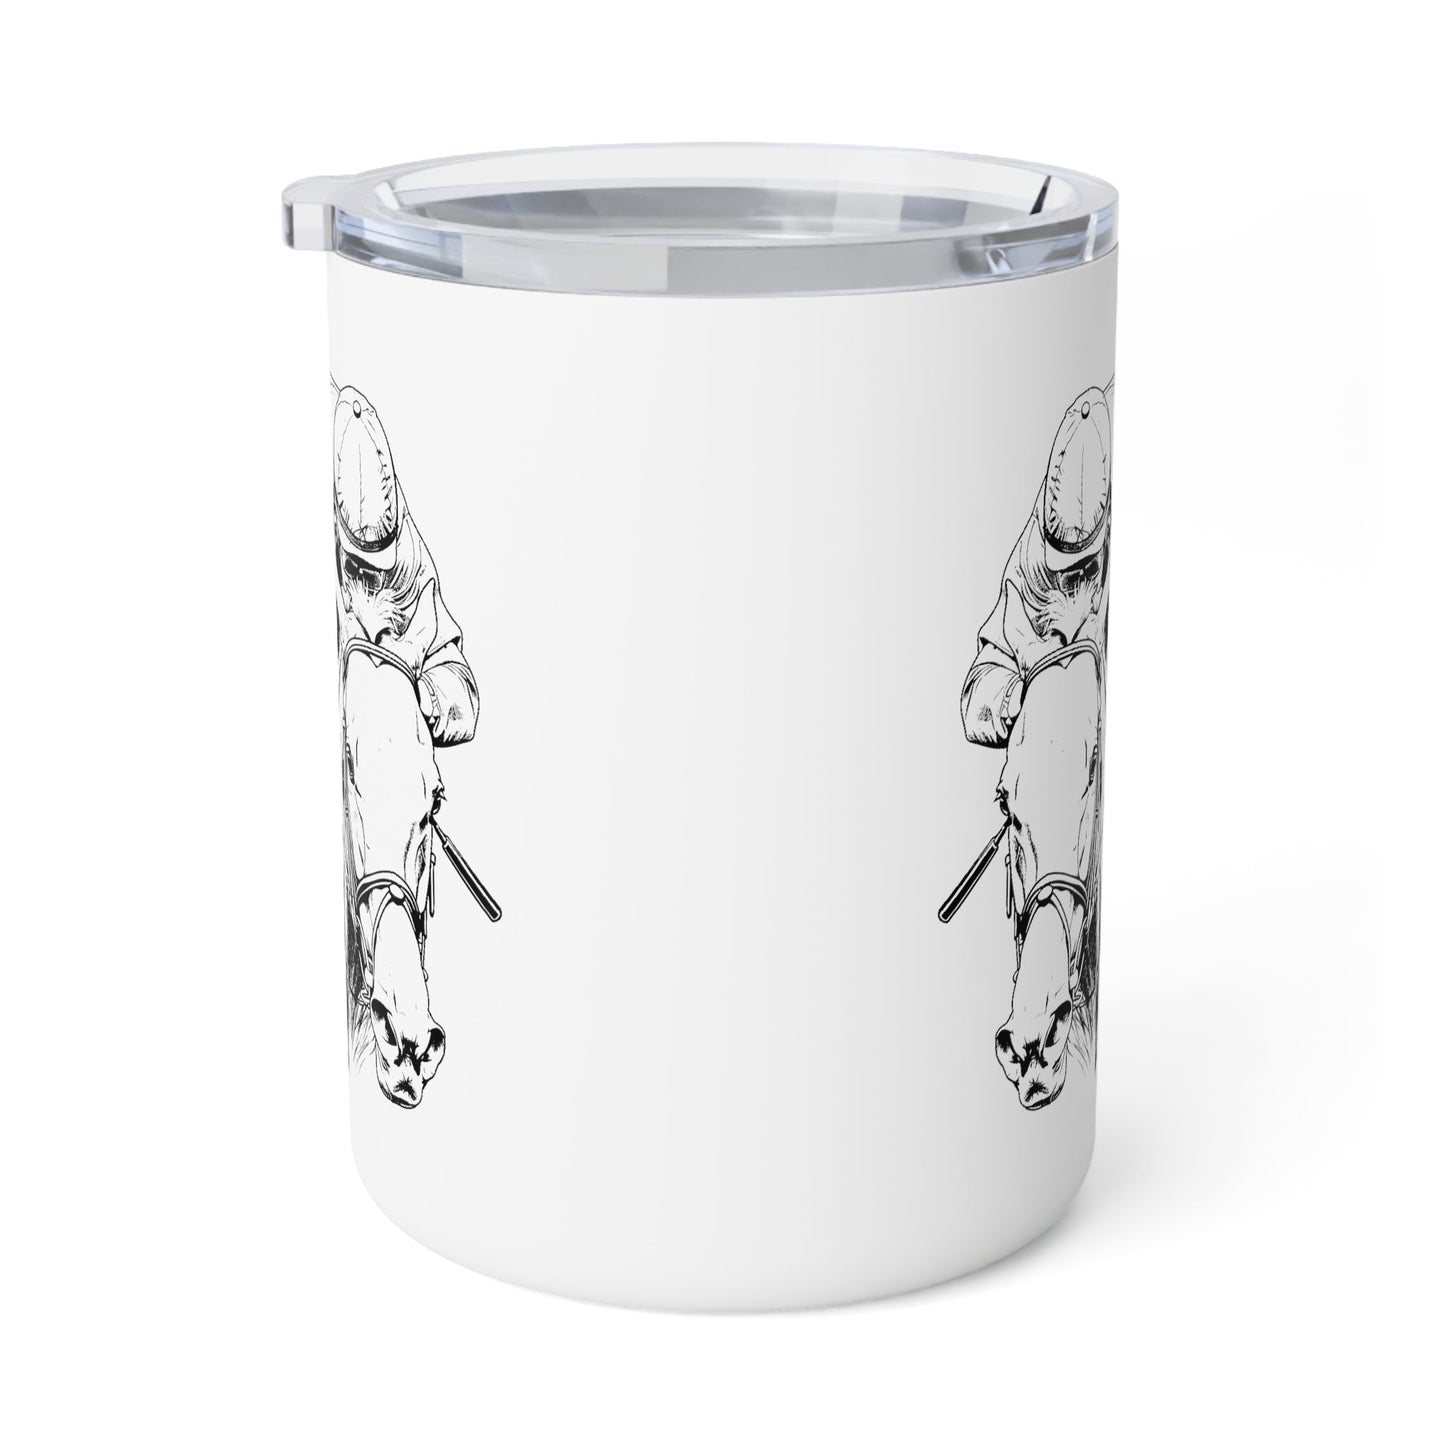 Thoroughbred Horse Racing Insulated Mug,10oz, Print Drawing for Horserace lovers - FlooredByArt